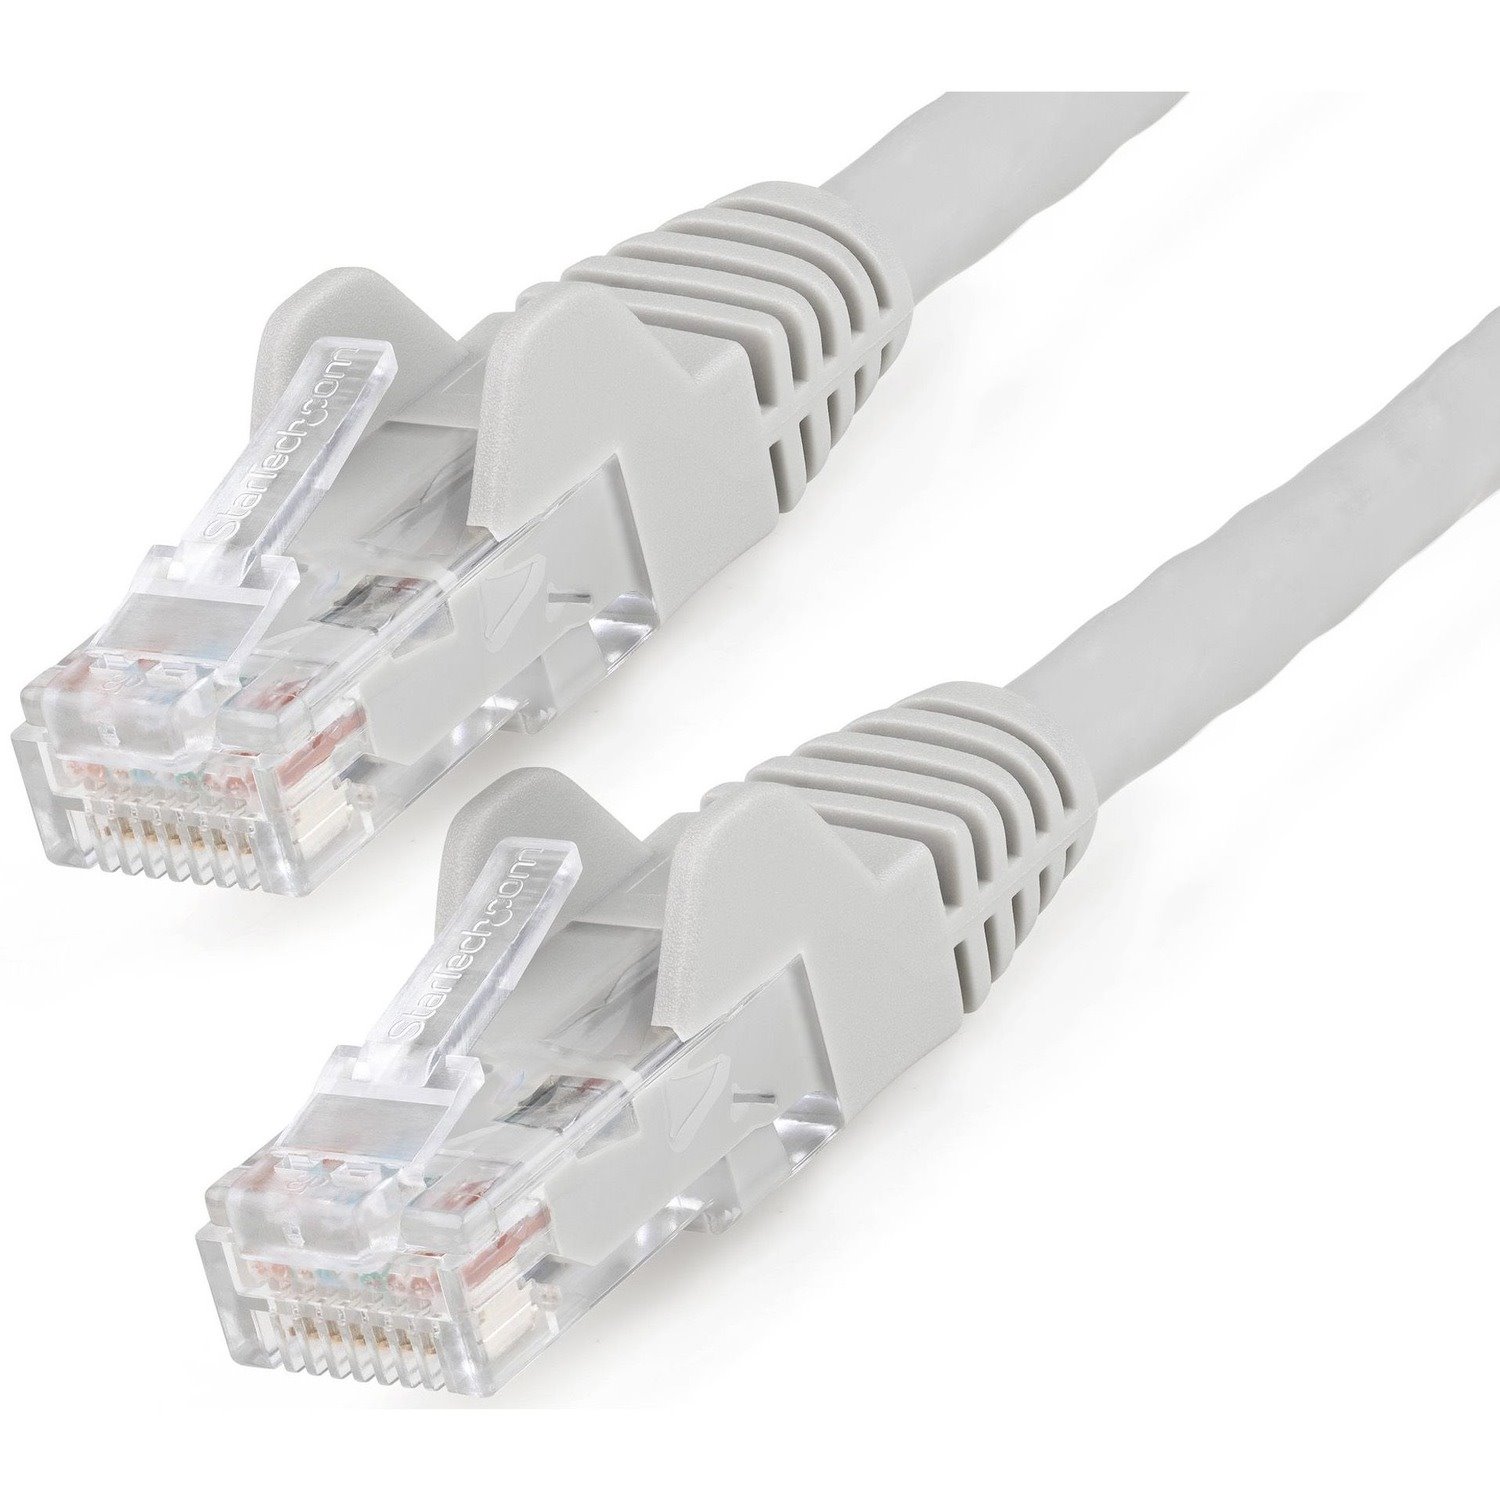 StarTech.com 50cm CAT6 Ethernet Cable, LSZH (Low Smoke Zero Halogen), 10 GbE Snagless 100W PoE UTP RJ45 Grey CAT 6 Network Patch Cord, ETL